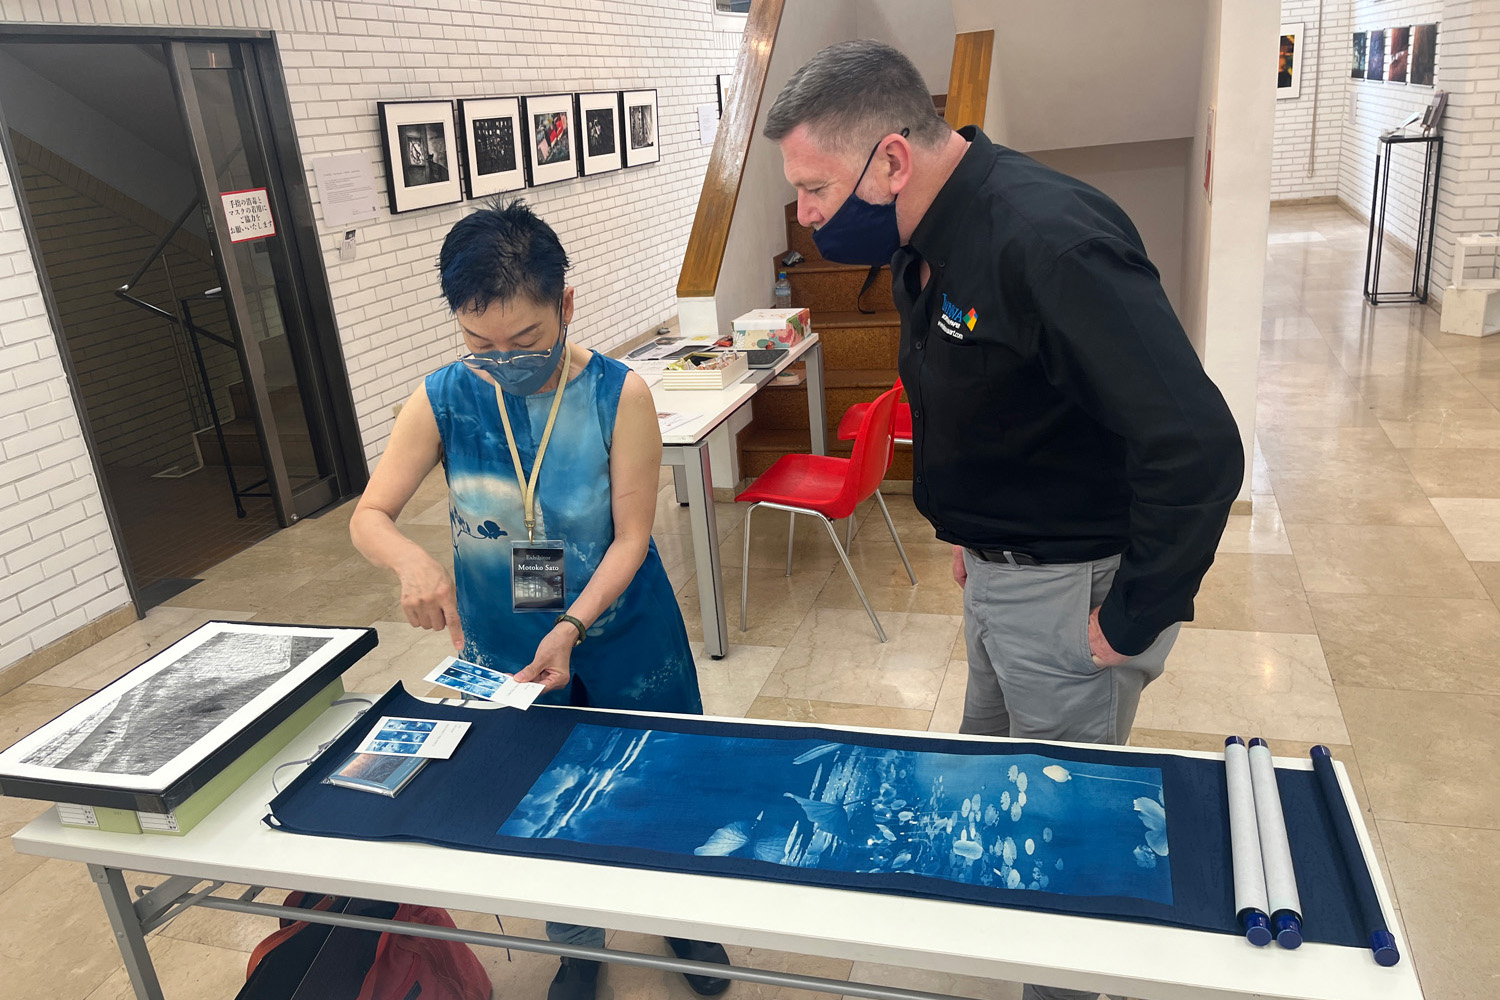 SAMURAI FOTO group exhibition in 2022